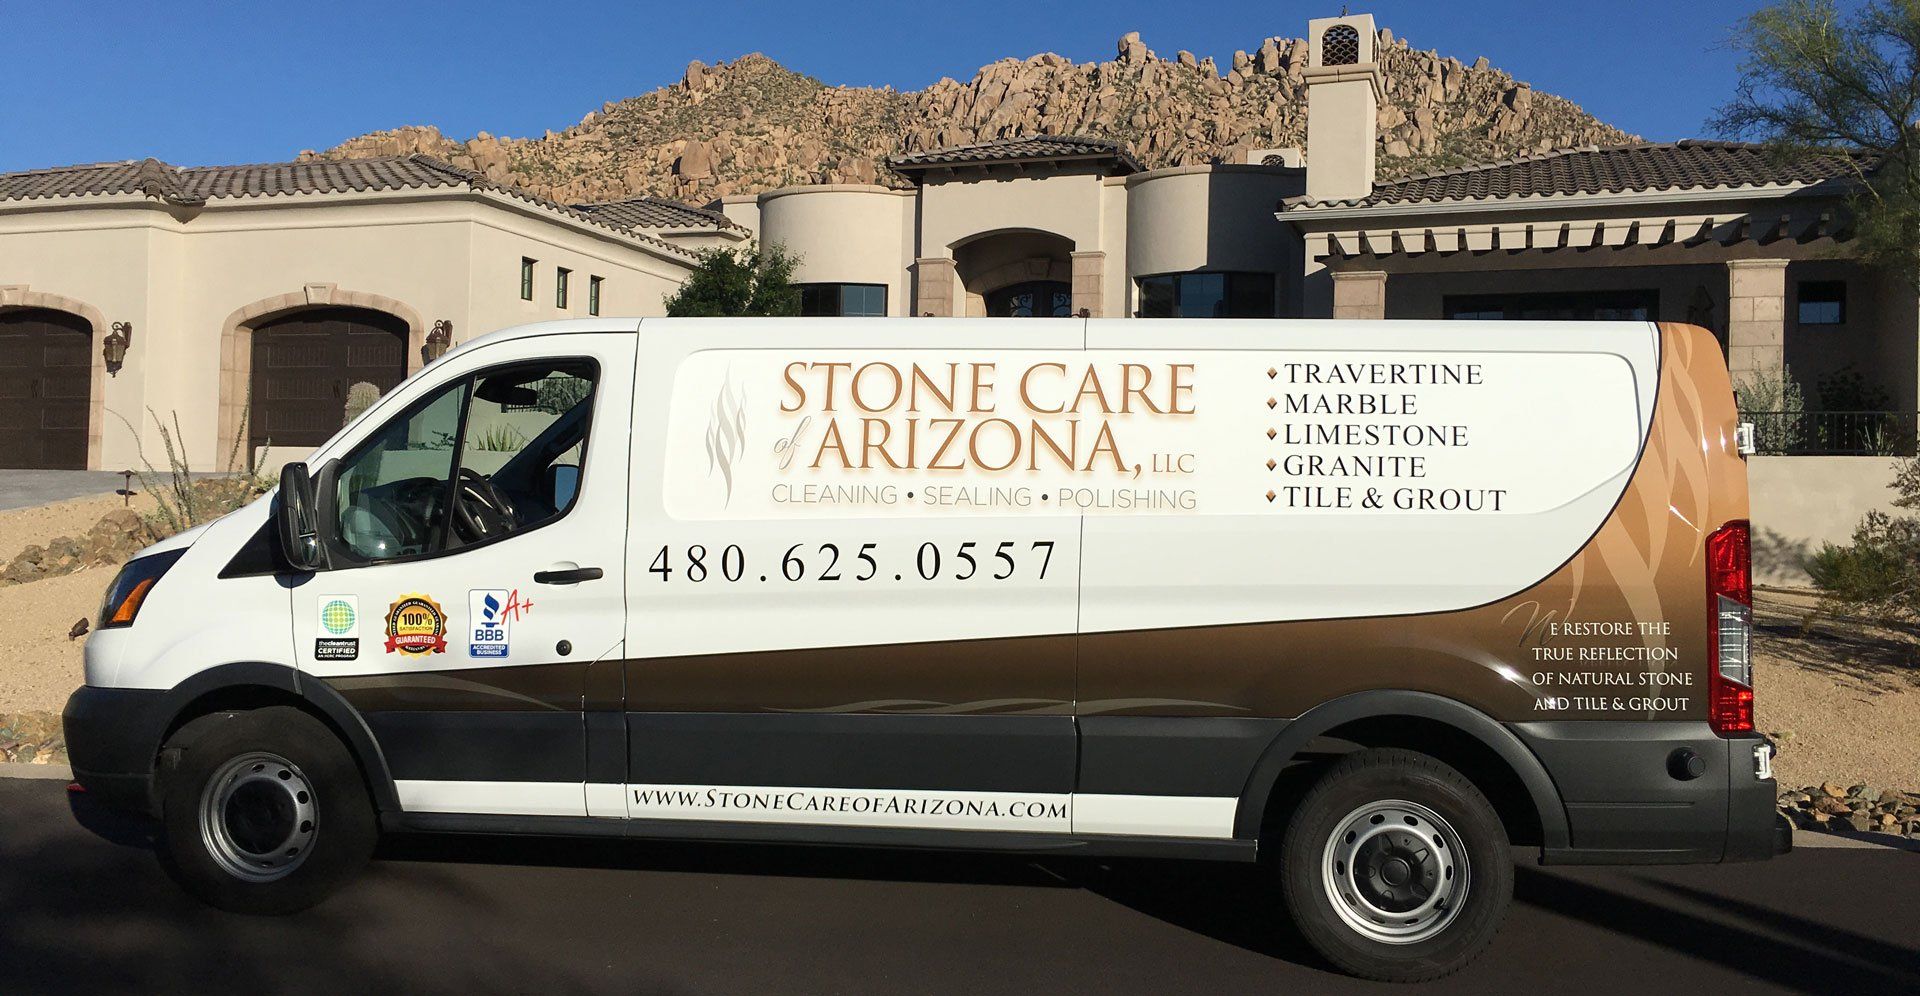 Why Choose Stone Care of Arizona?